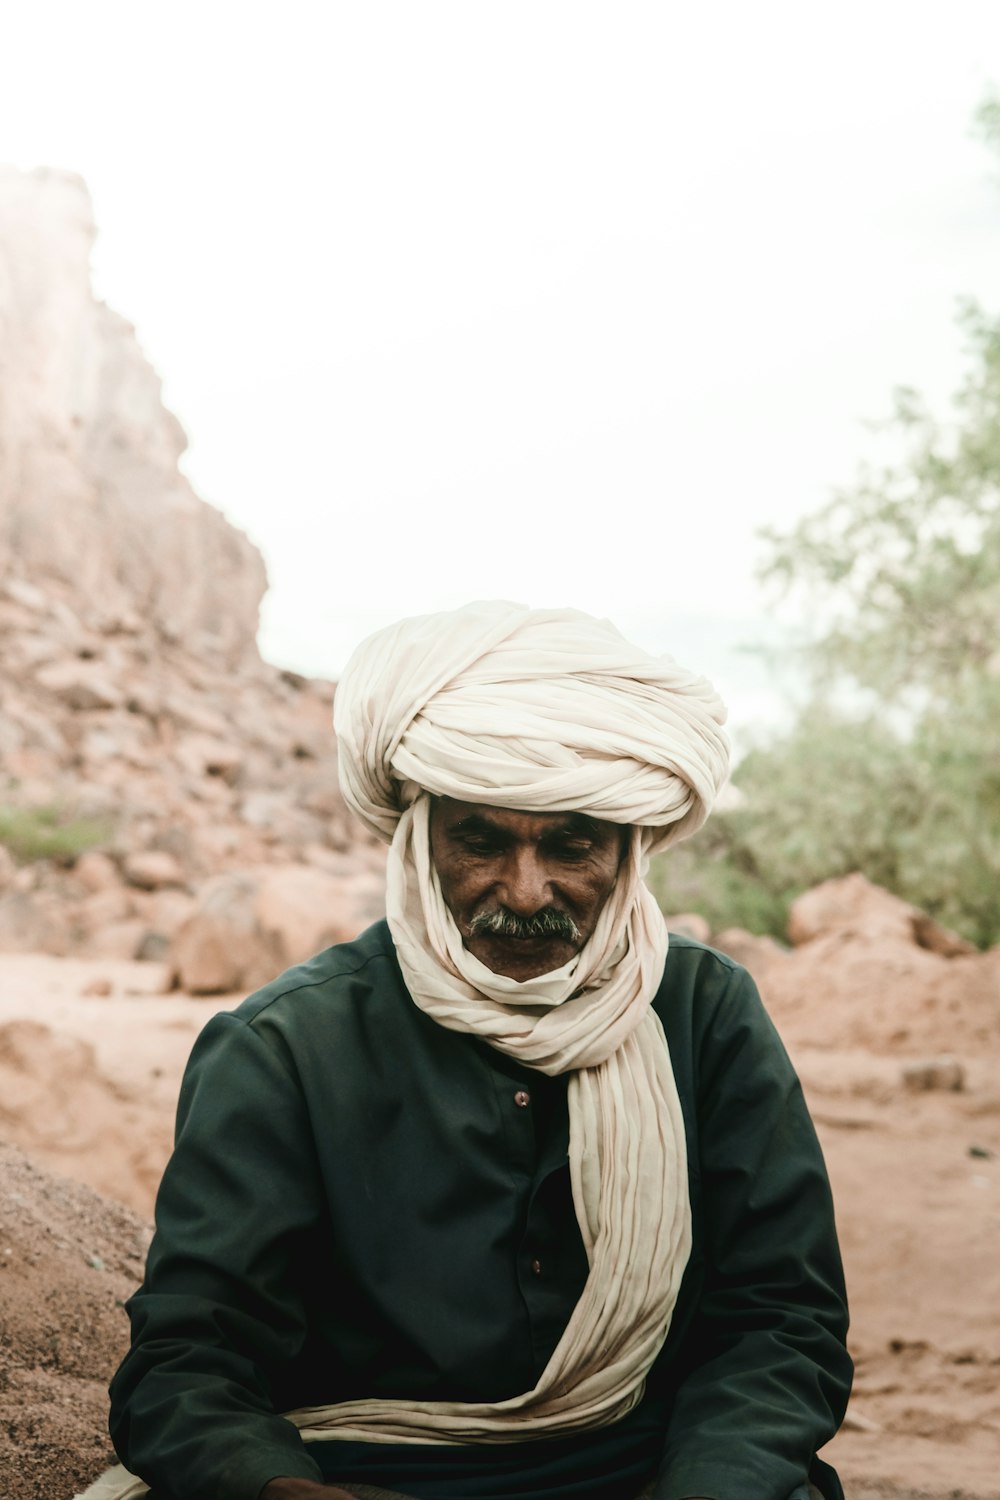 a man in a turban sitting on a rock